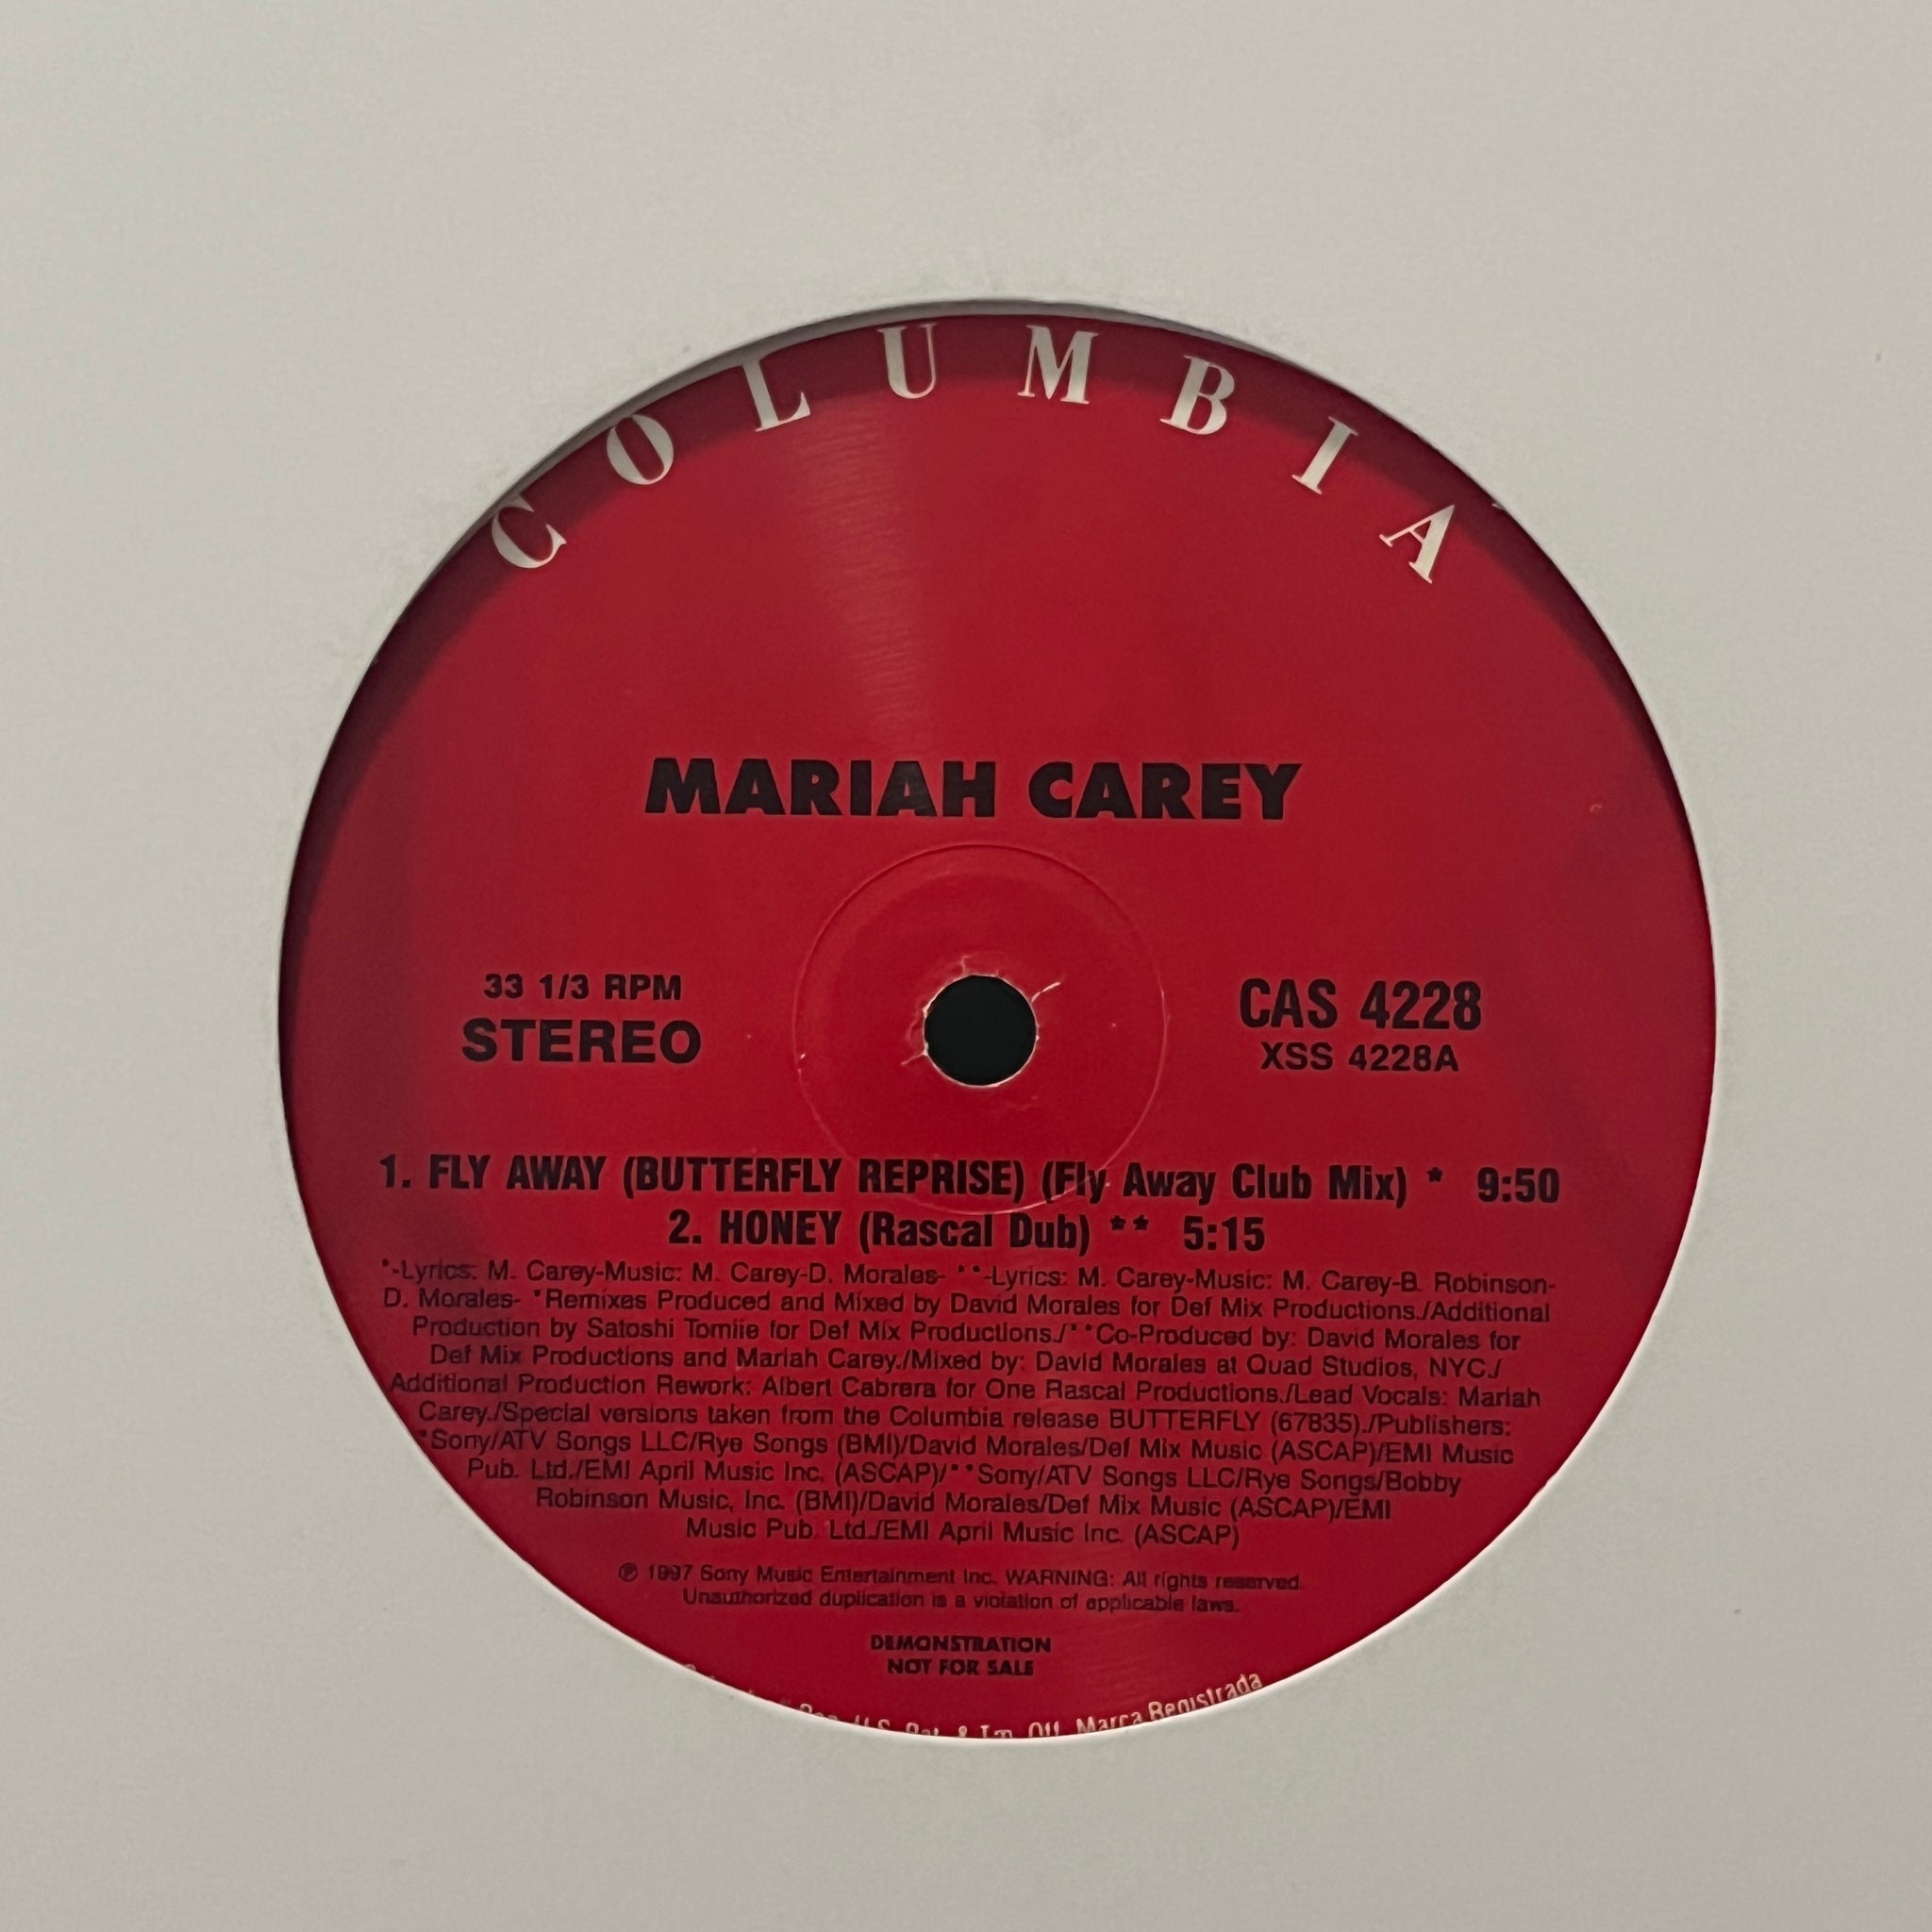 Mariah Carey – Fly Away (Butterfly Reprise) / Honey